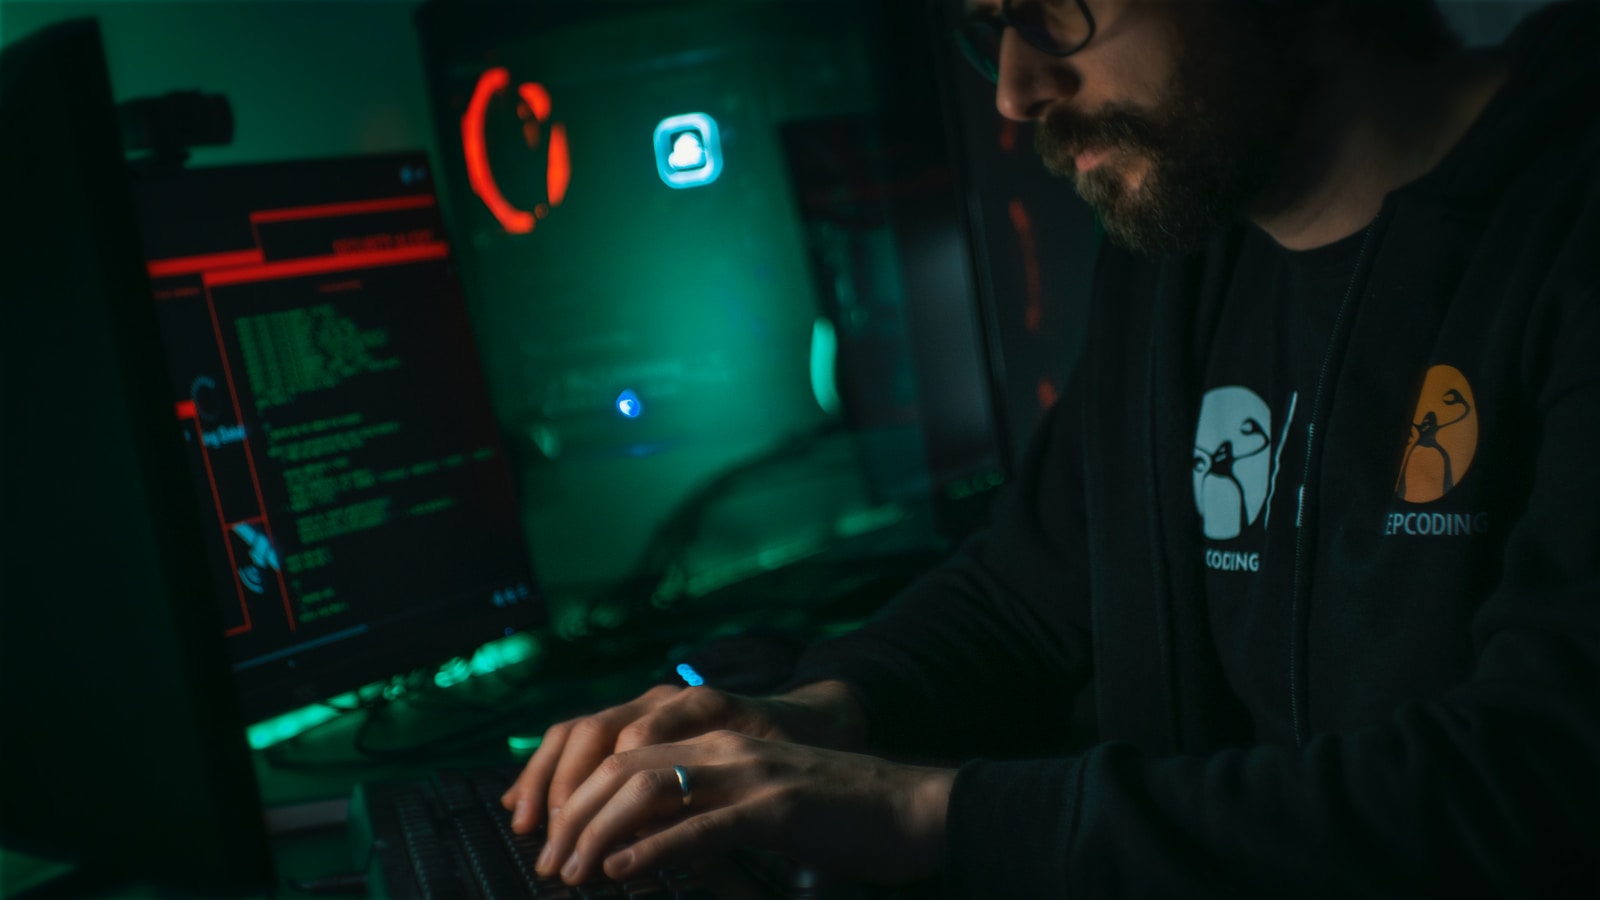 man in black jacket using computer